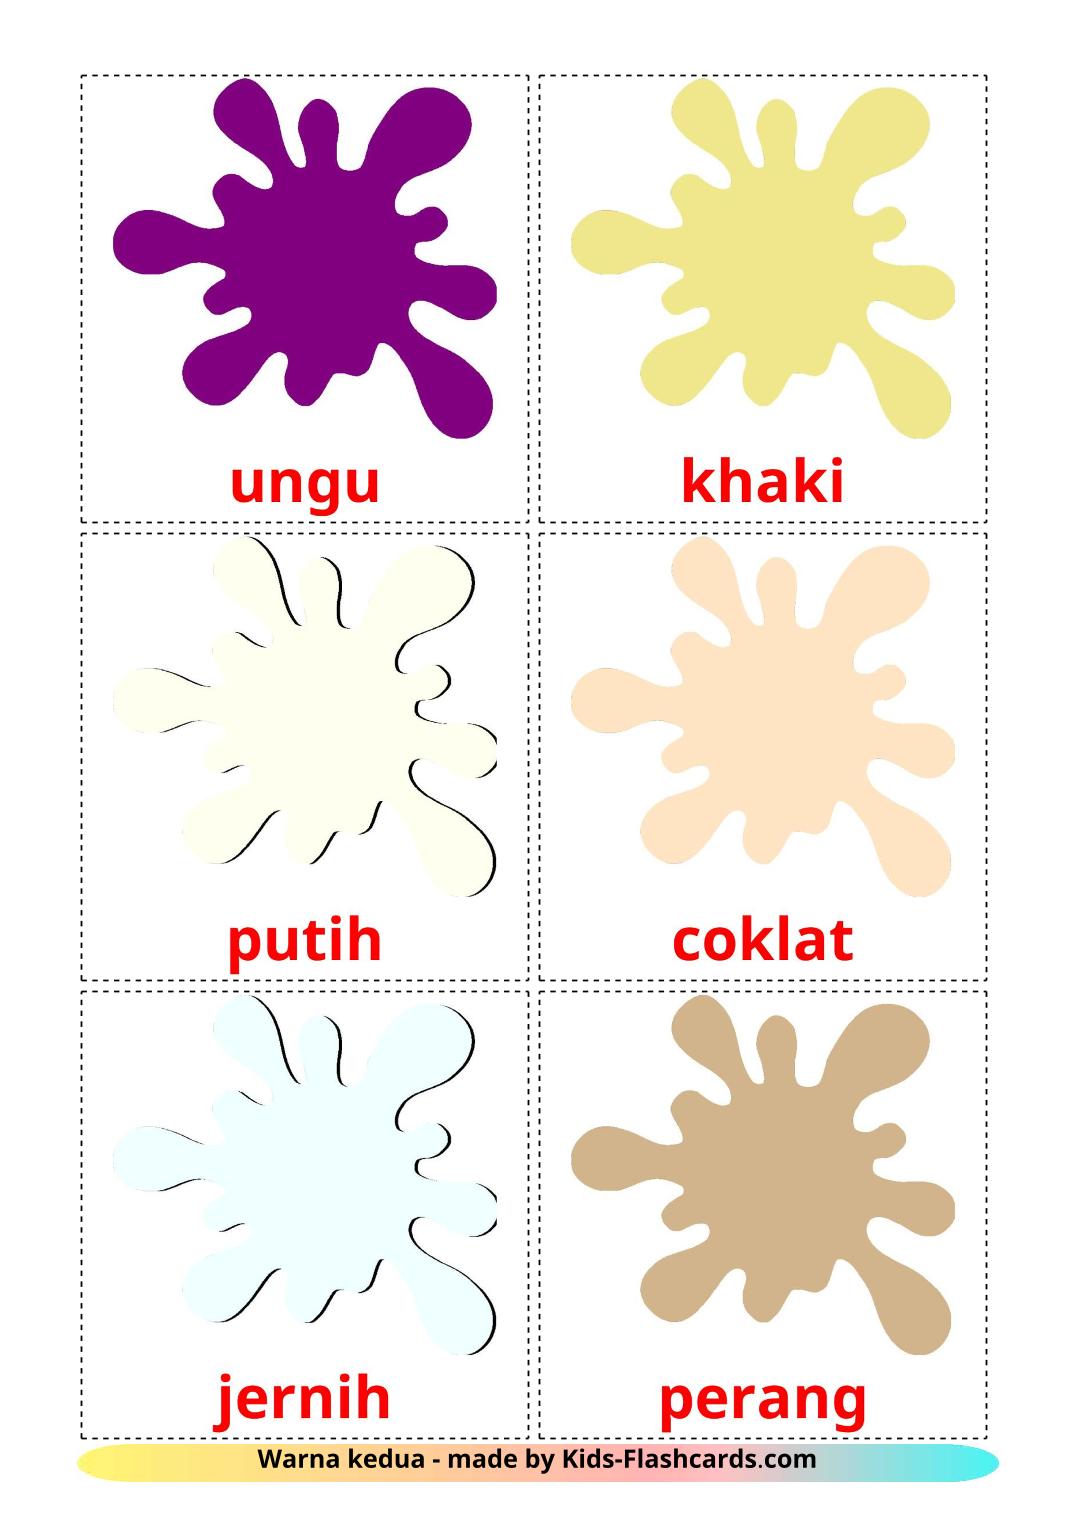 Colores secundarios - 20 fichas de indonesio para imprimir gratis 